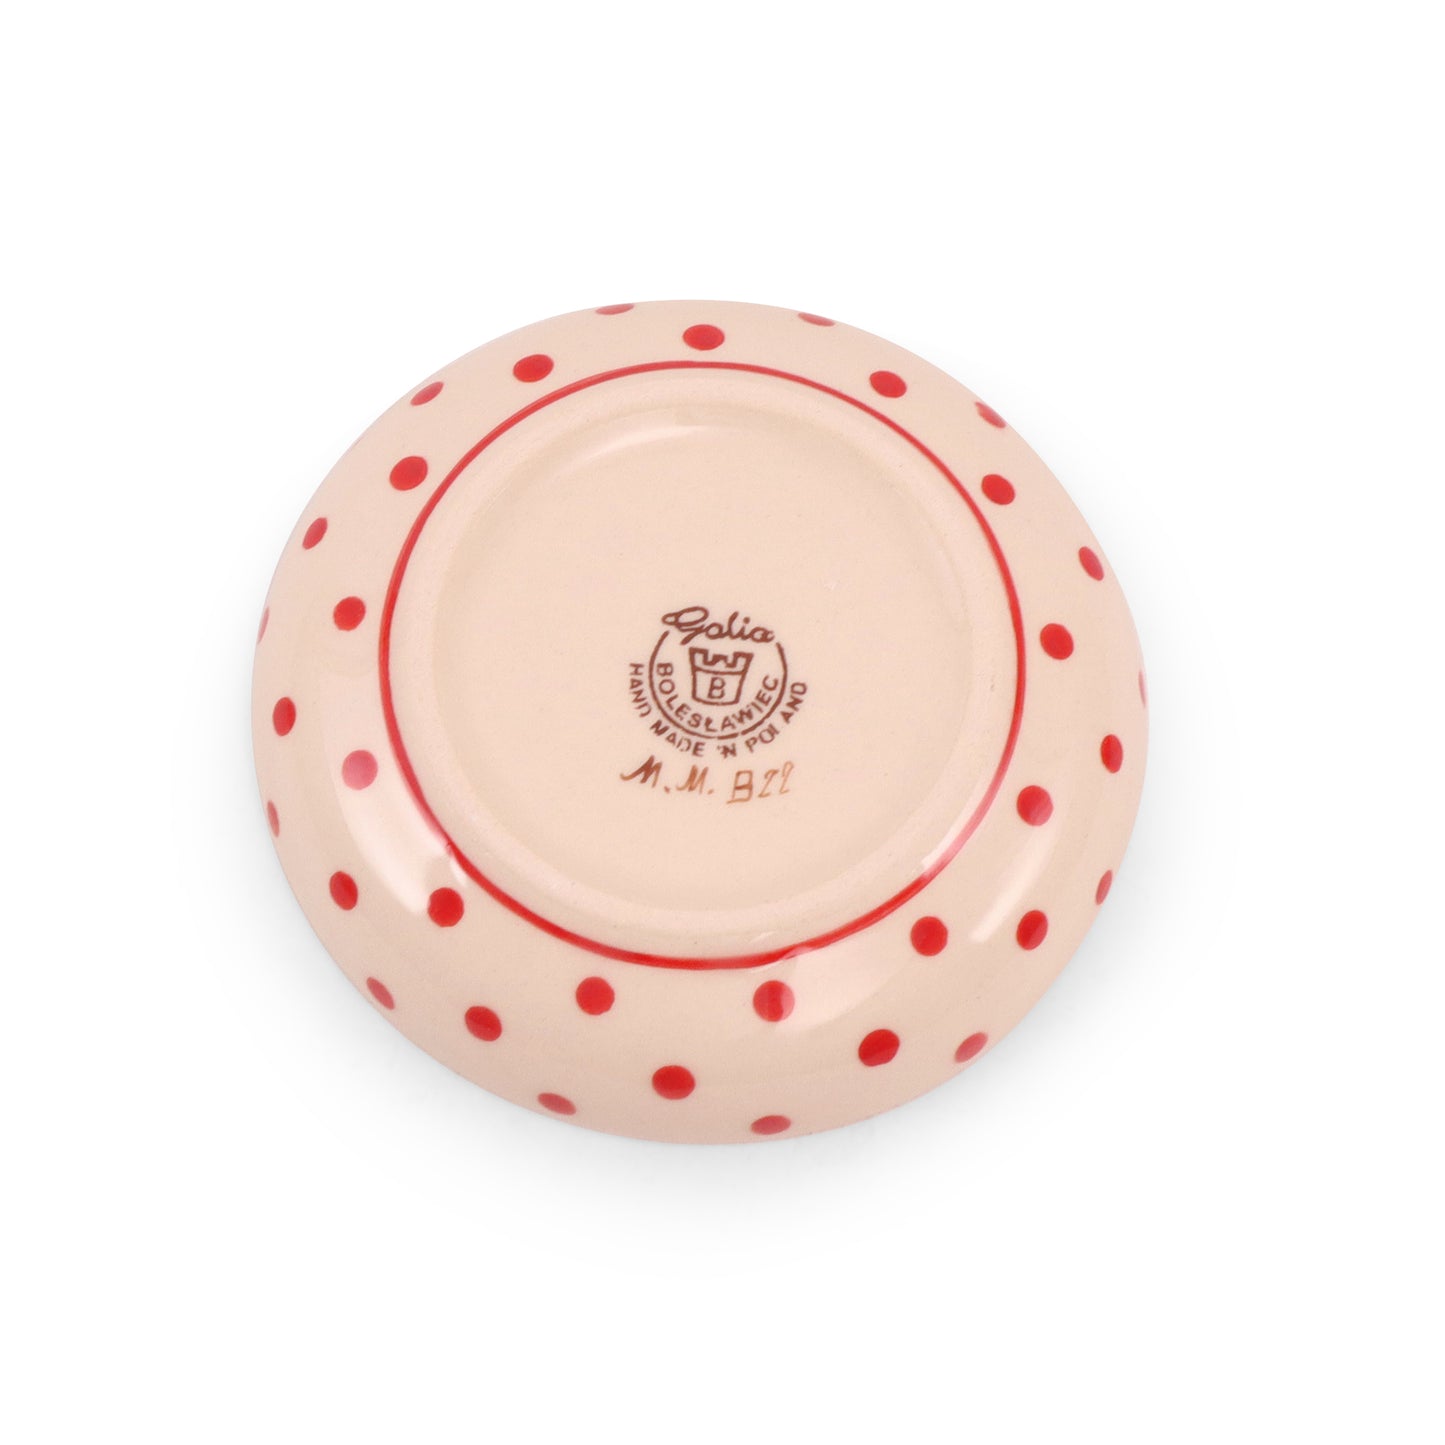 5.5" Shallow Bowl. Pattern: Red Polka Dot